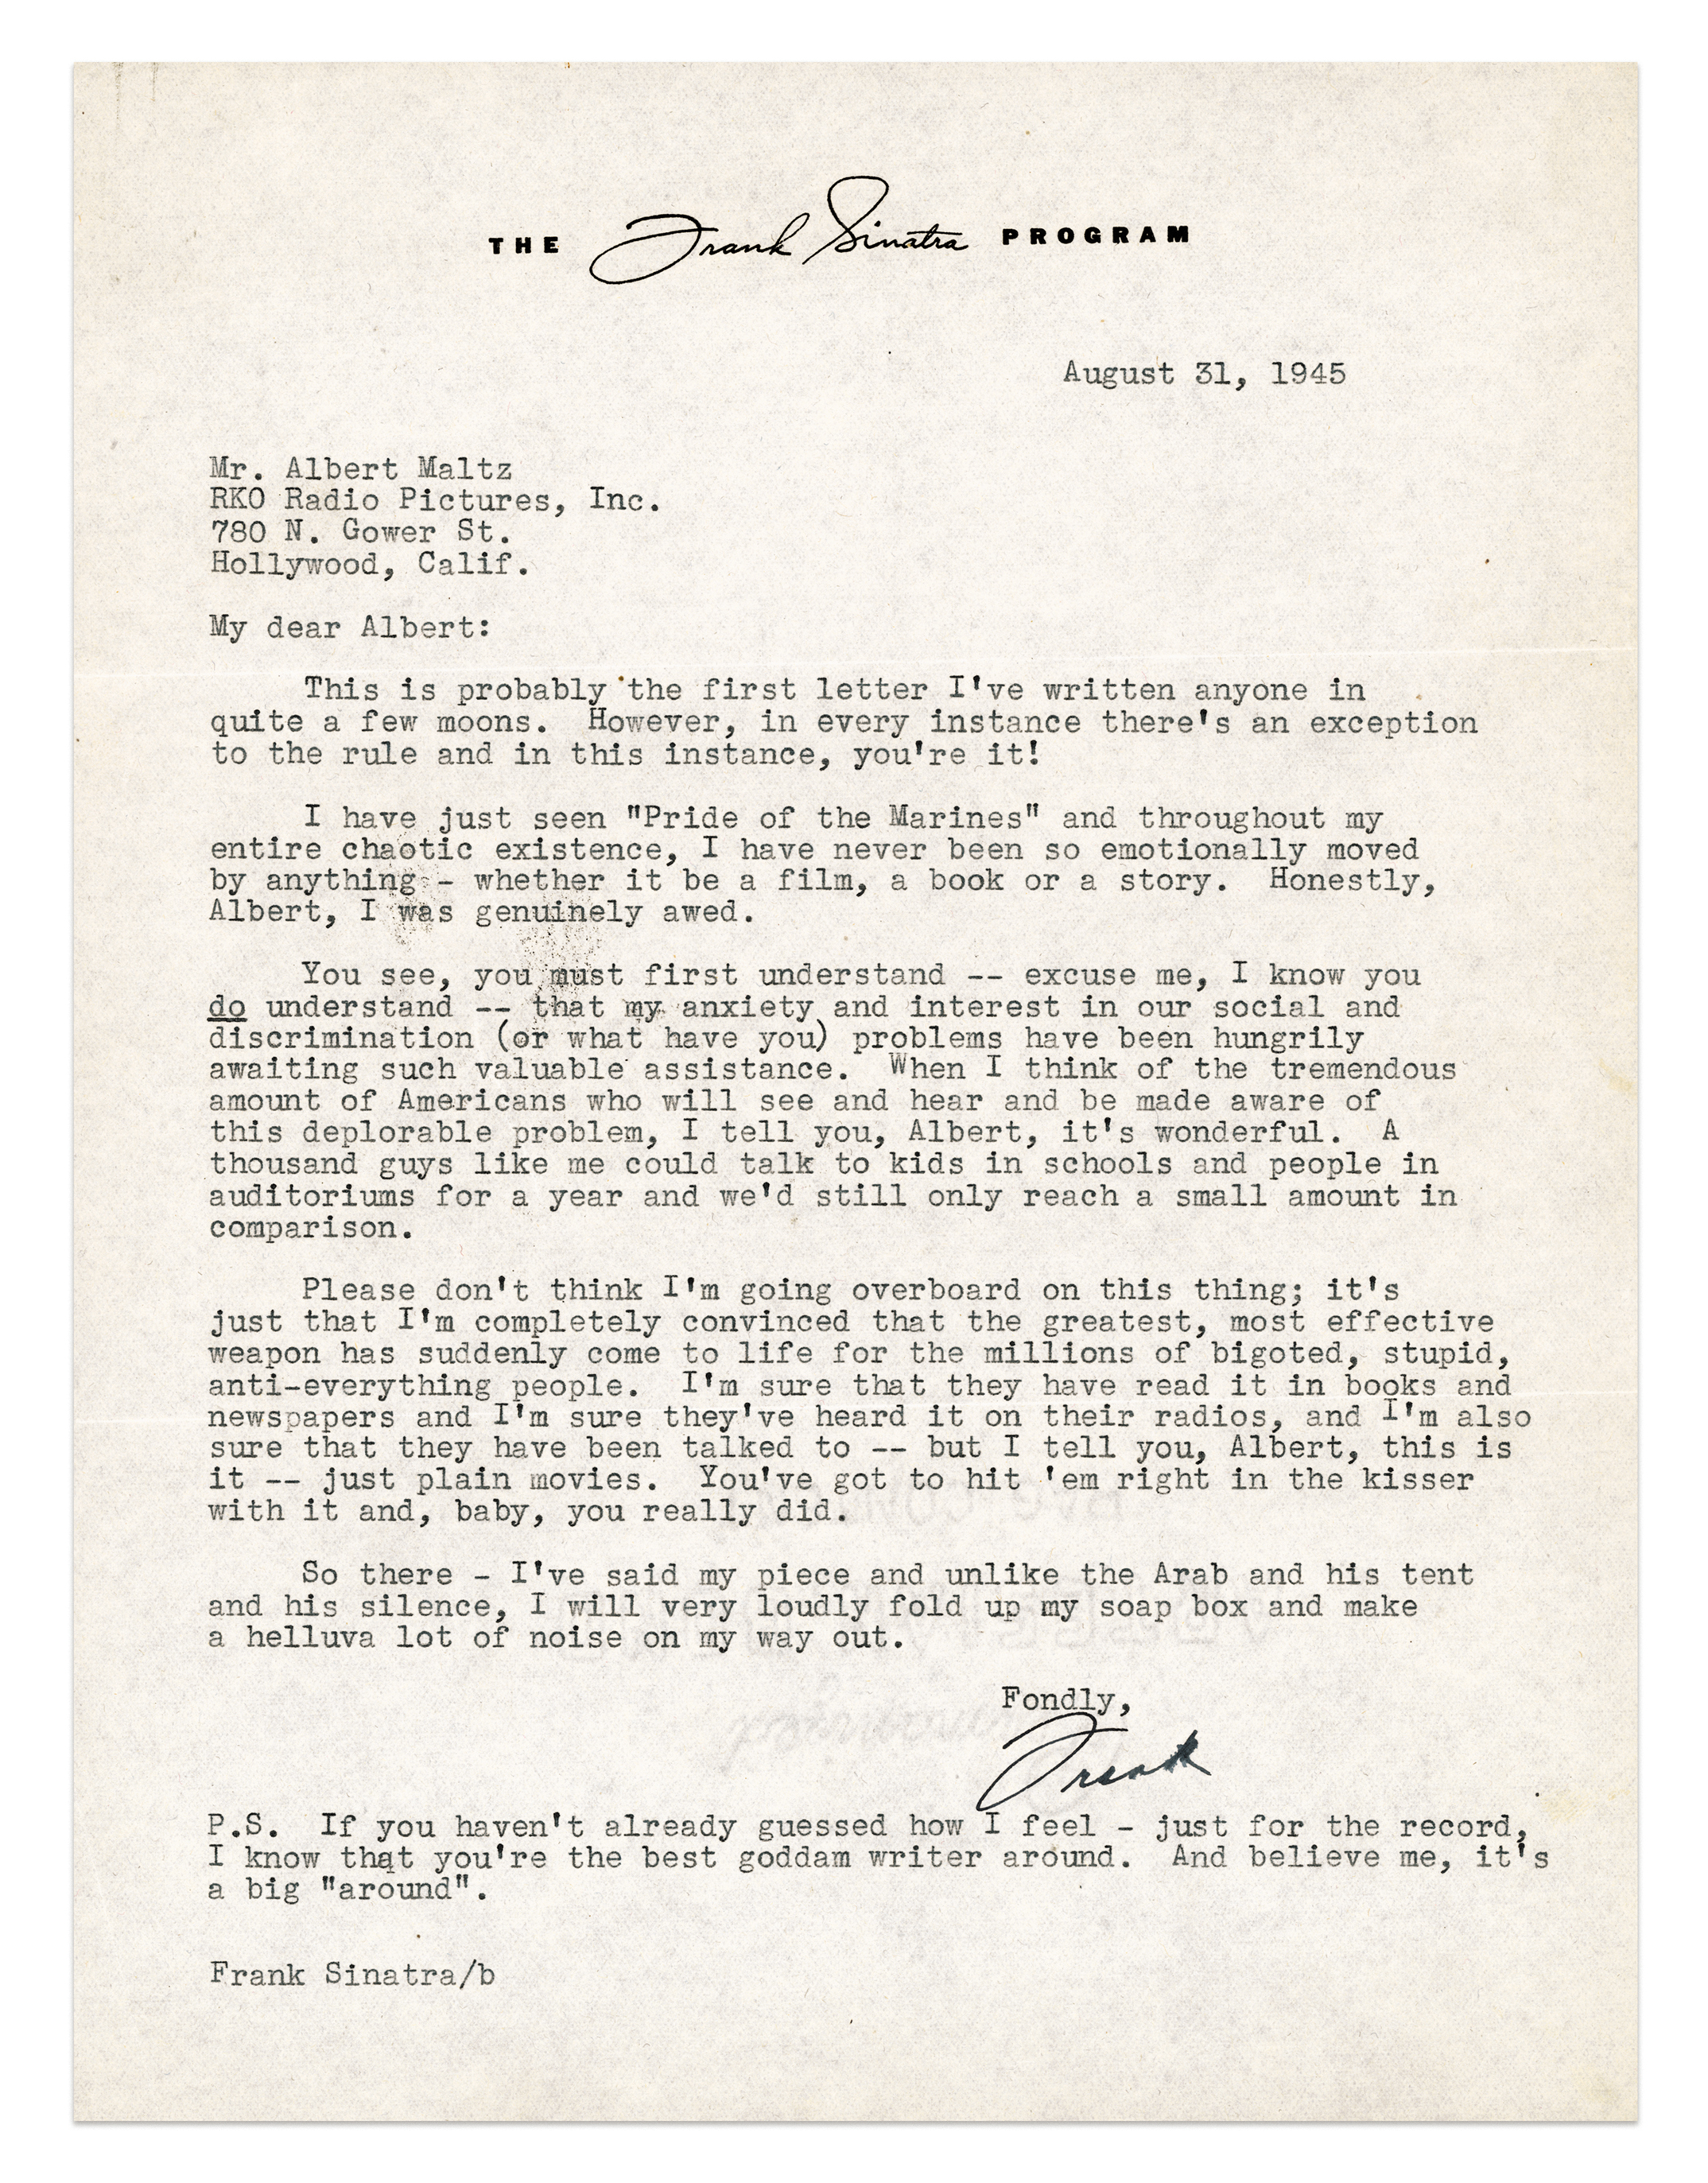 Frank Sinatra's letter to Albert Maltz. Aug. 31, 1945. (Courtesy of Frank Sinatra Enterprises)